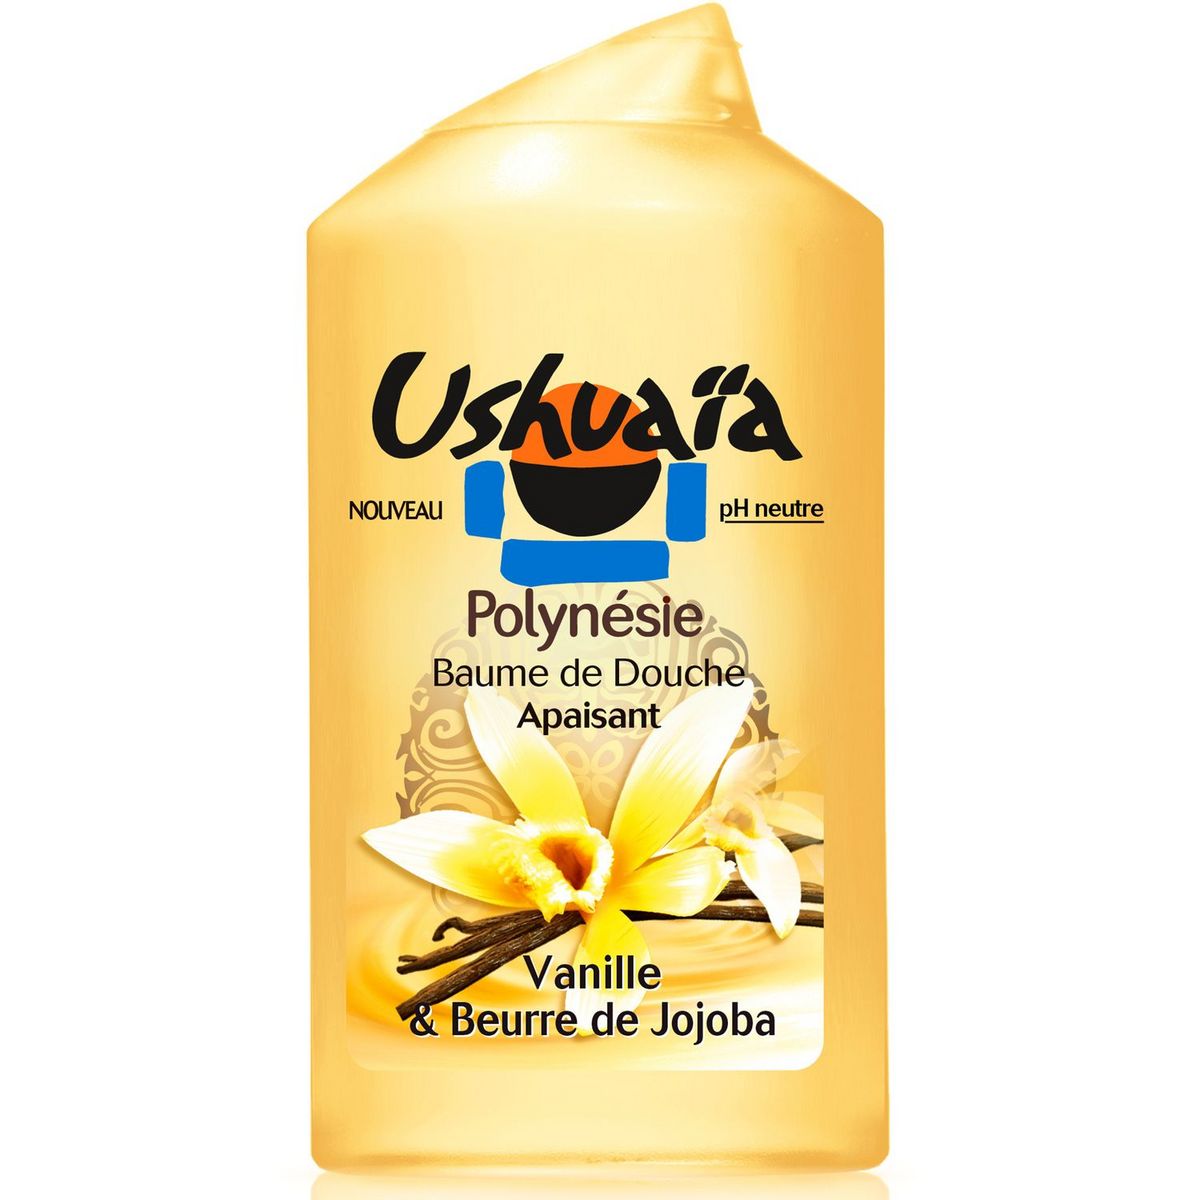 Ushuaia Shower gel Polynesie Vanilla & Jojoba butter 250ml